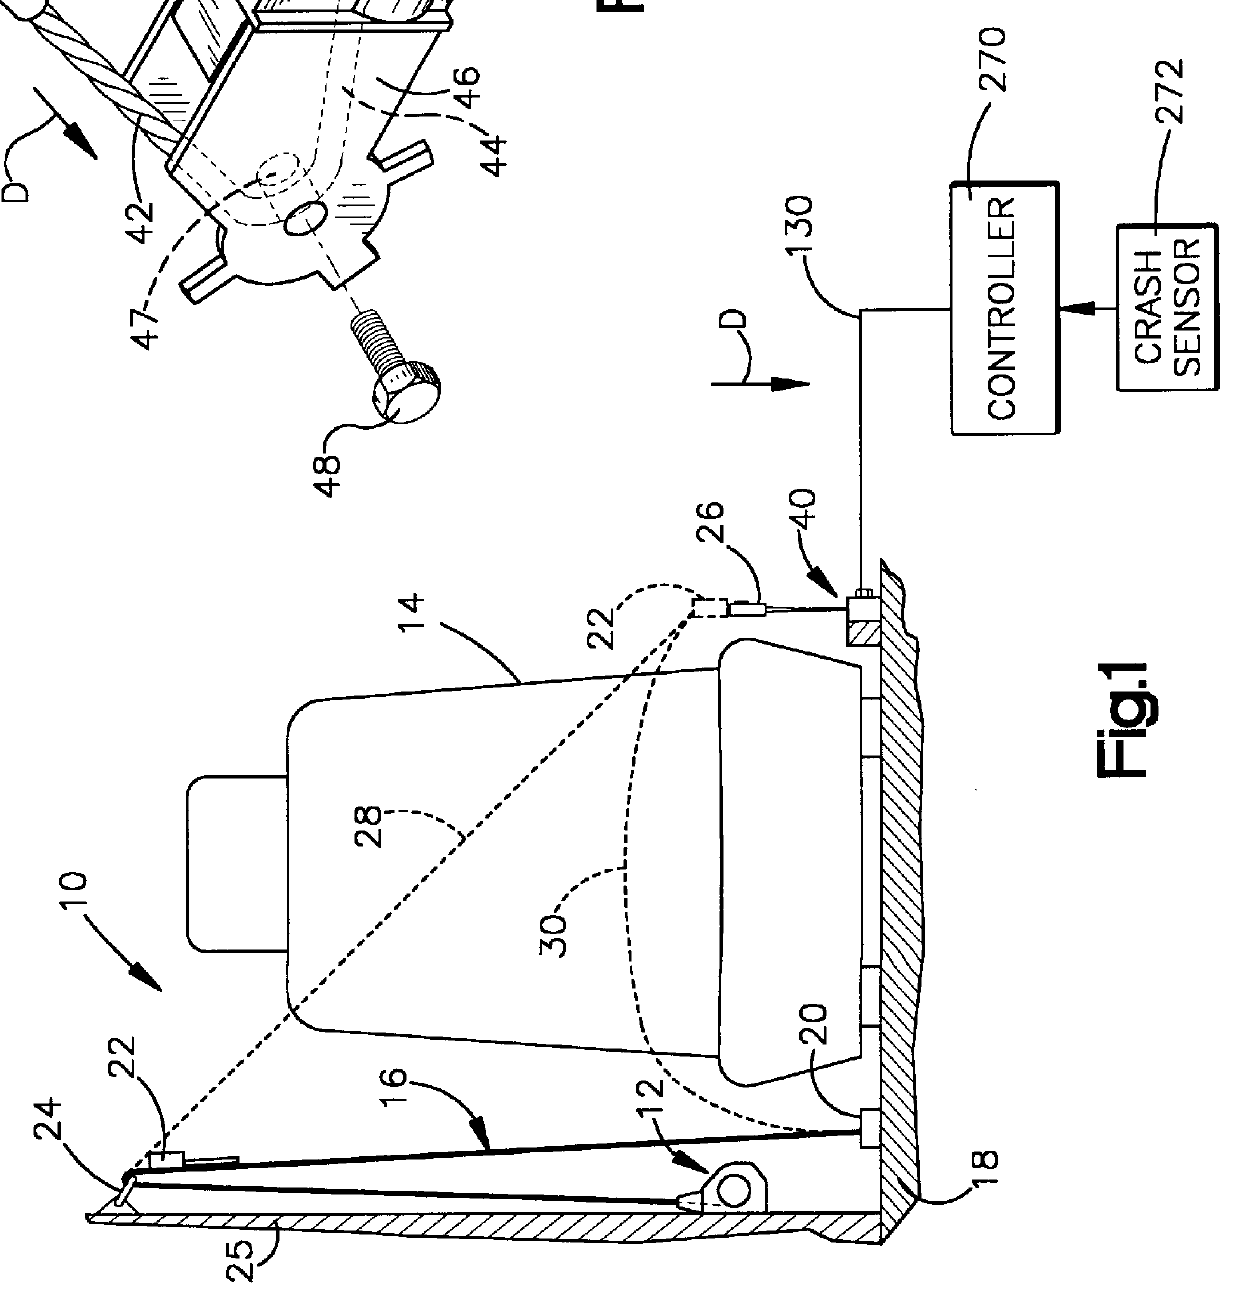 Apparatus for pretensioning seat belt webbing